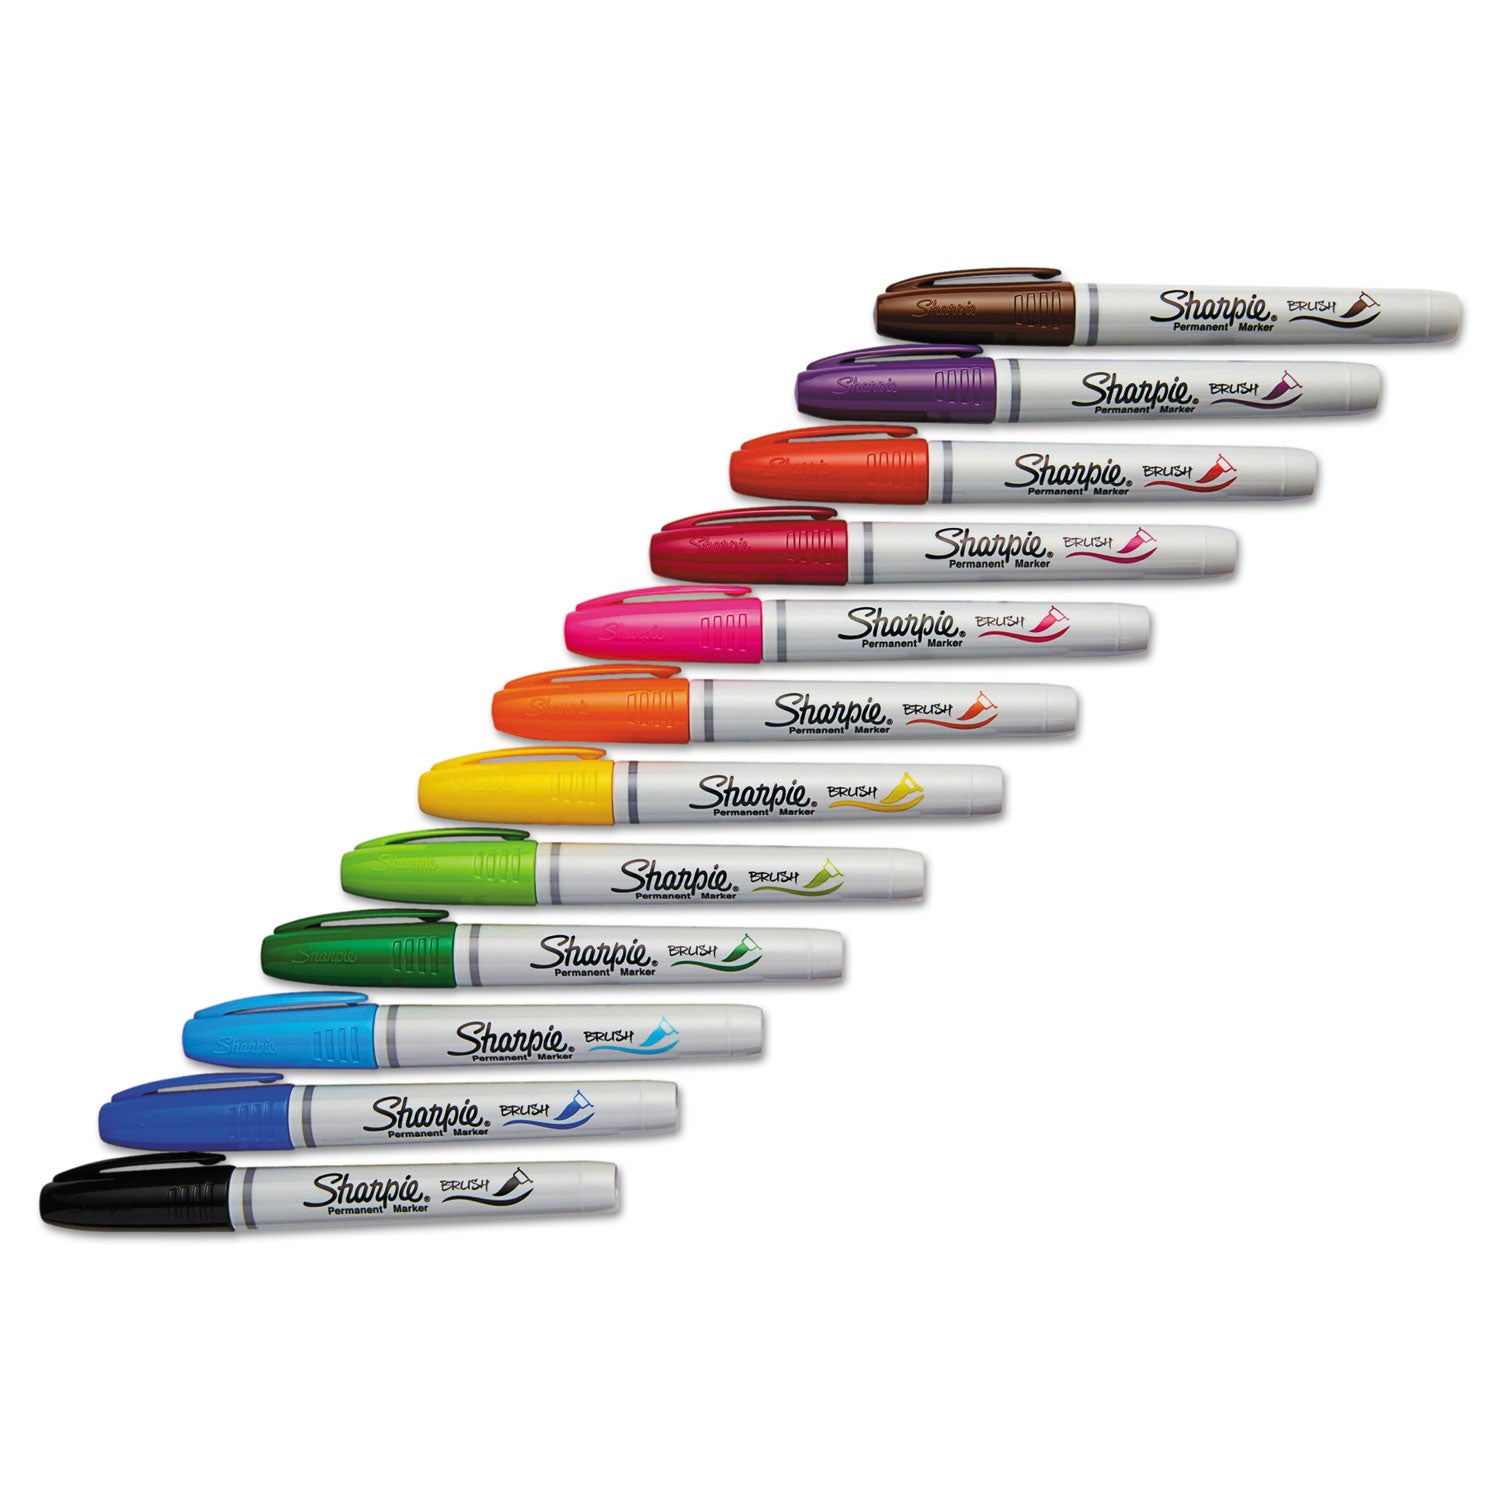 Brush Tip Permanent Marker, Medium Brush Tip, Assorted Colors, 12/Set - 